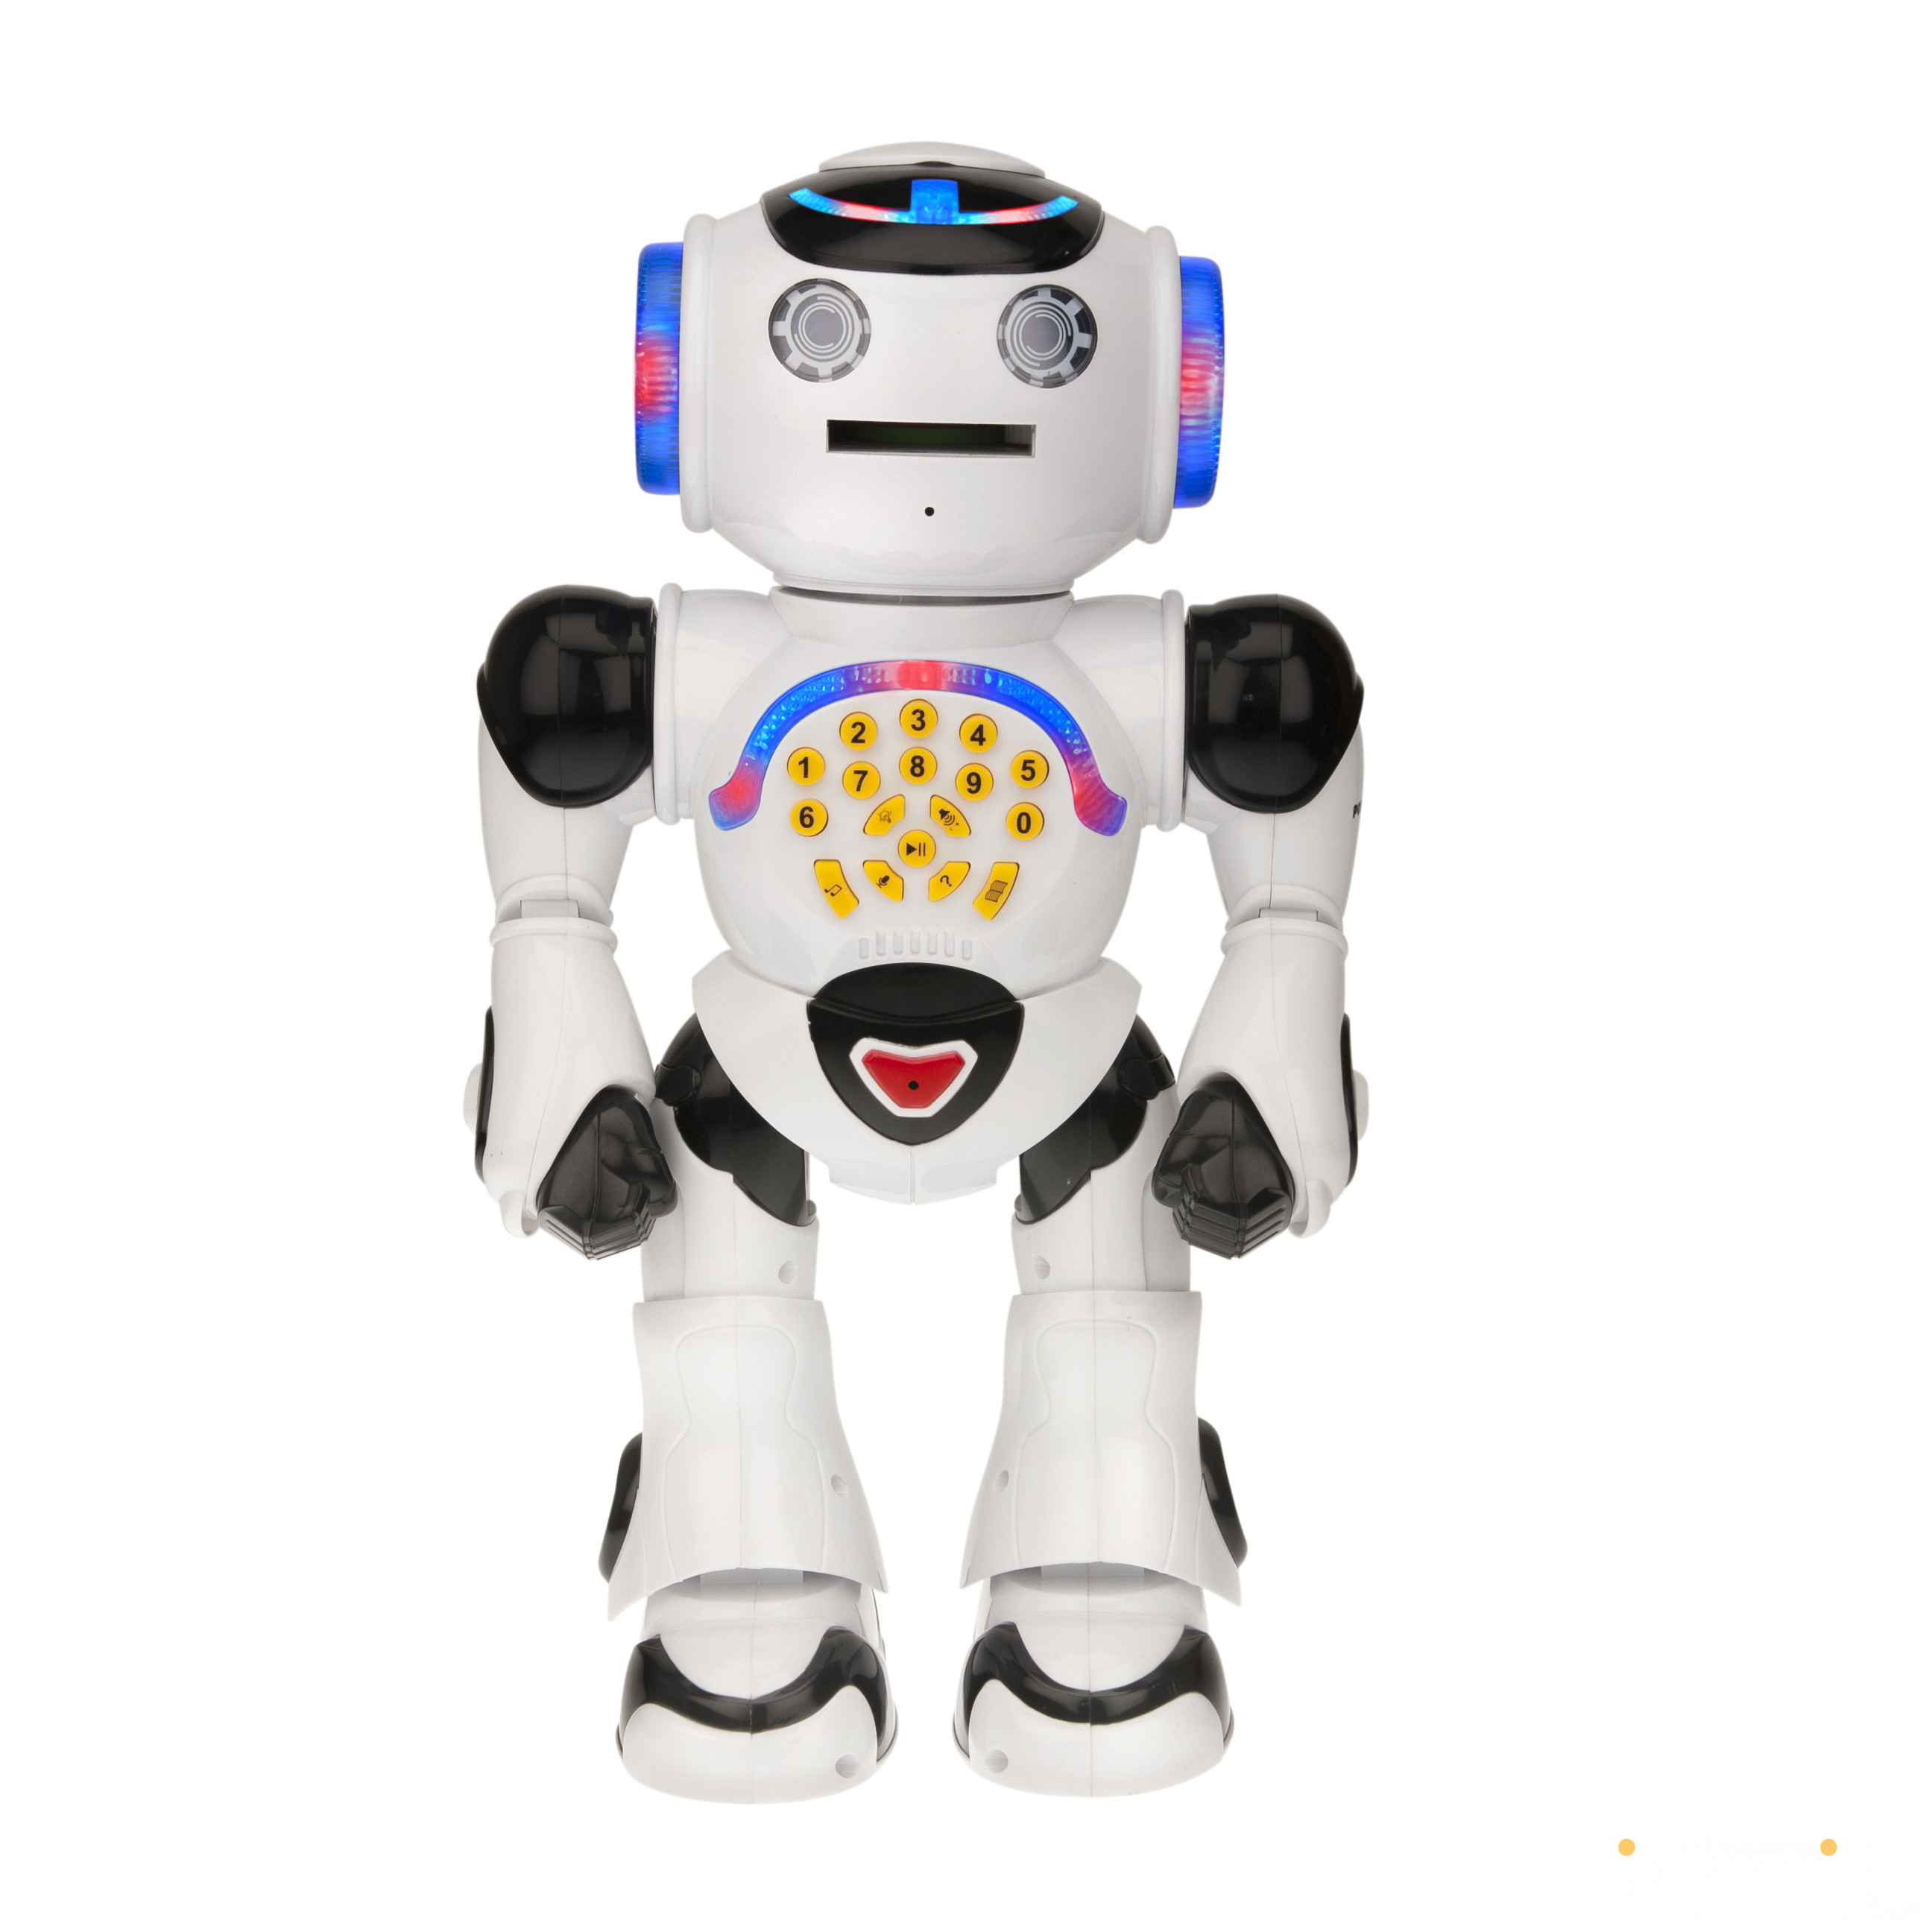 Buy POWERMAN® Robot (Arabic) Online in Dubai & the UAE